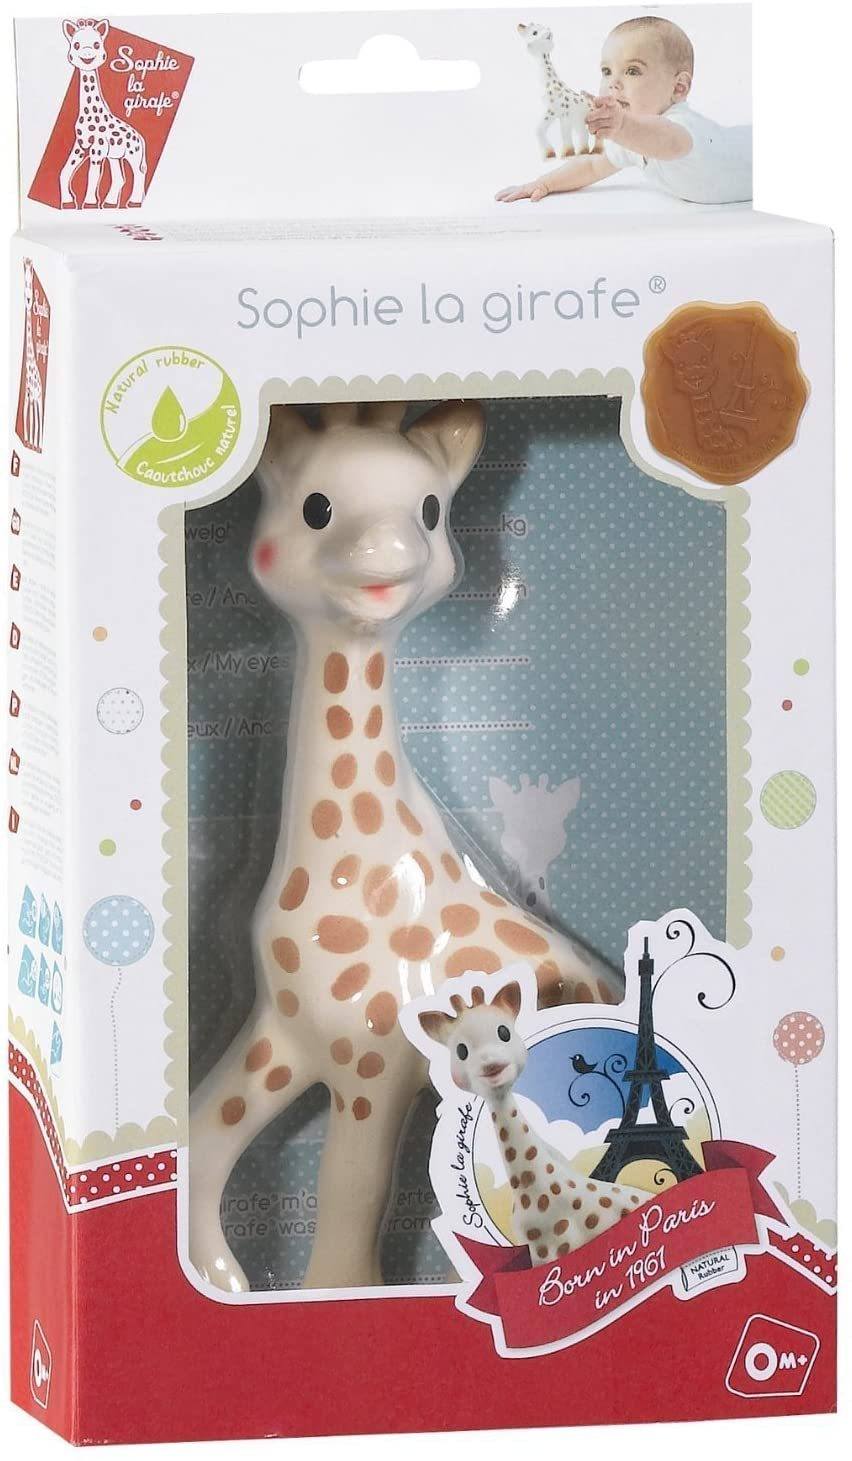 Girafa Sophie Vulli - Original Fresh Touch Gift Box Bestseller Anne Claire Baby Store Ltd. 